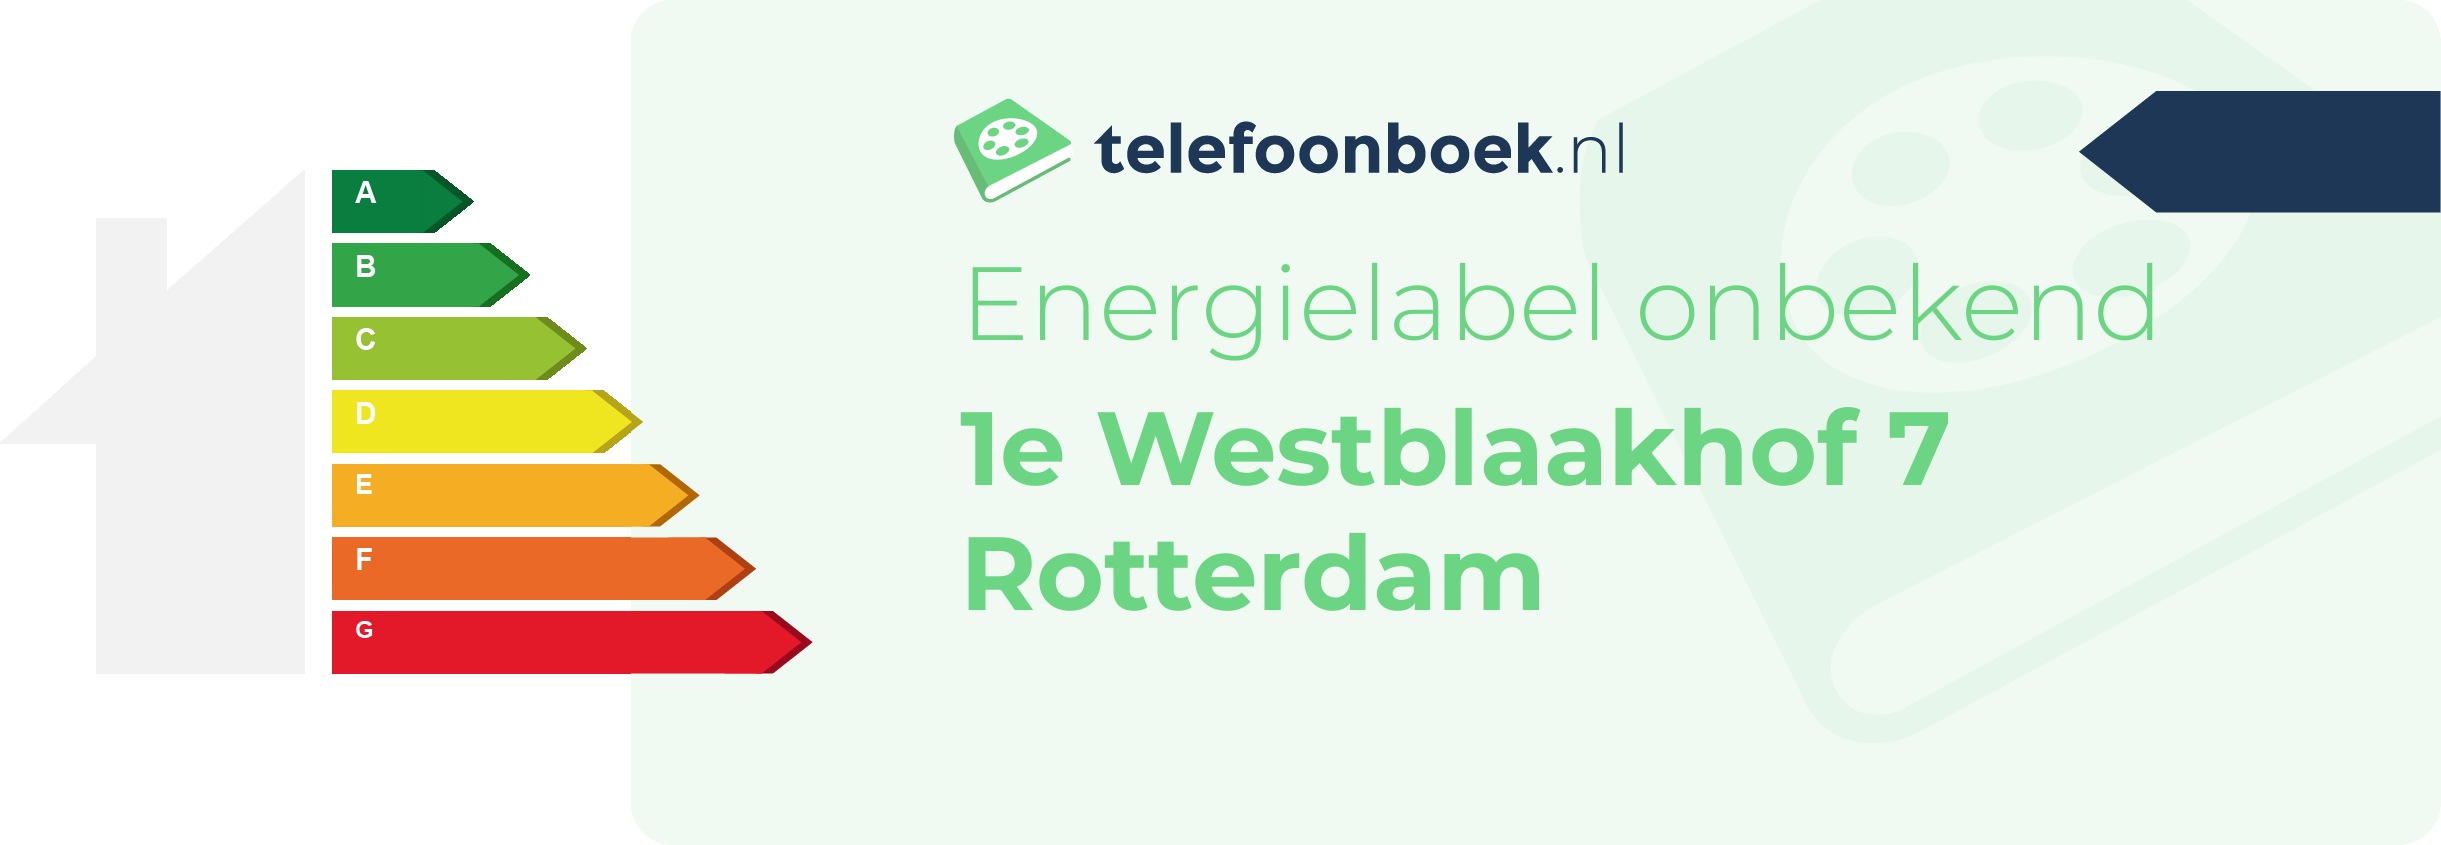 Energielabel 1e Westblaakhof 7 Rotterdam